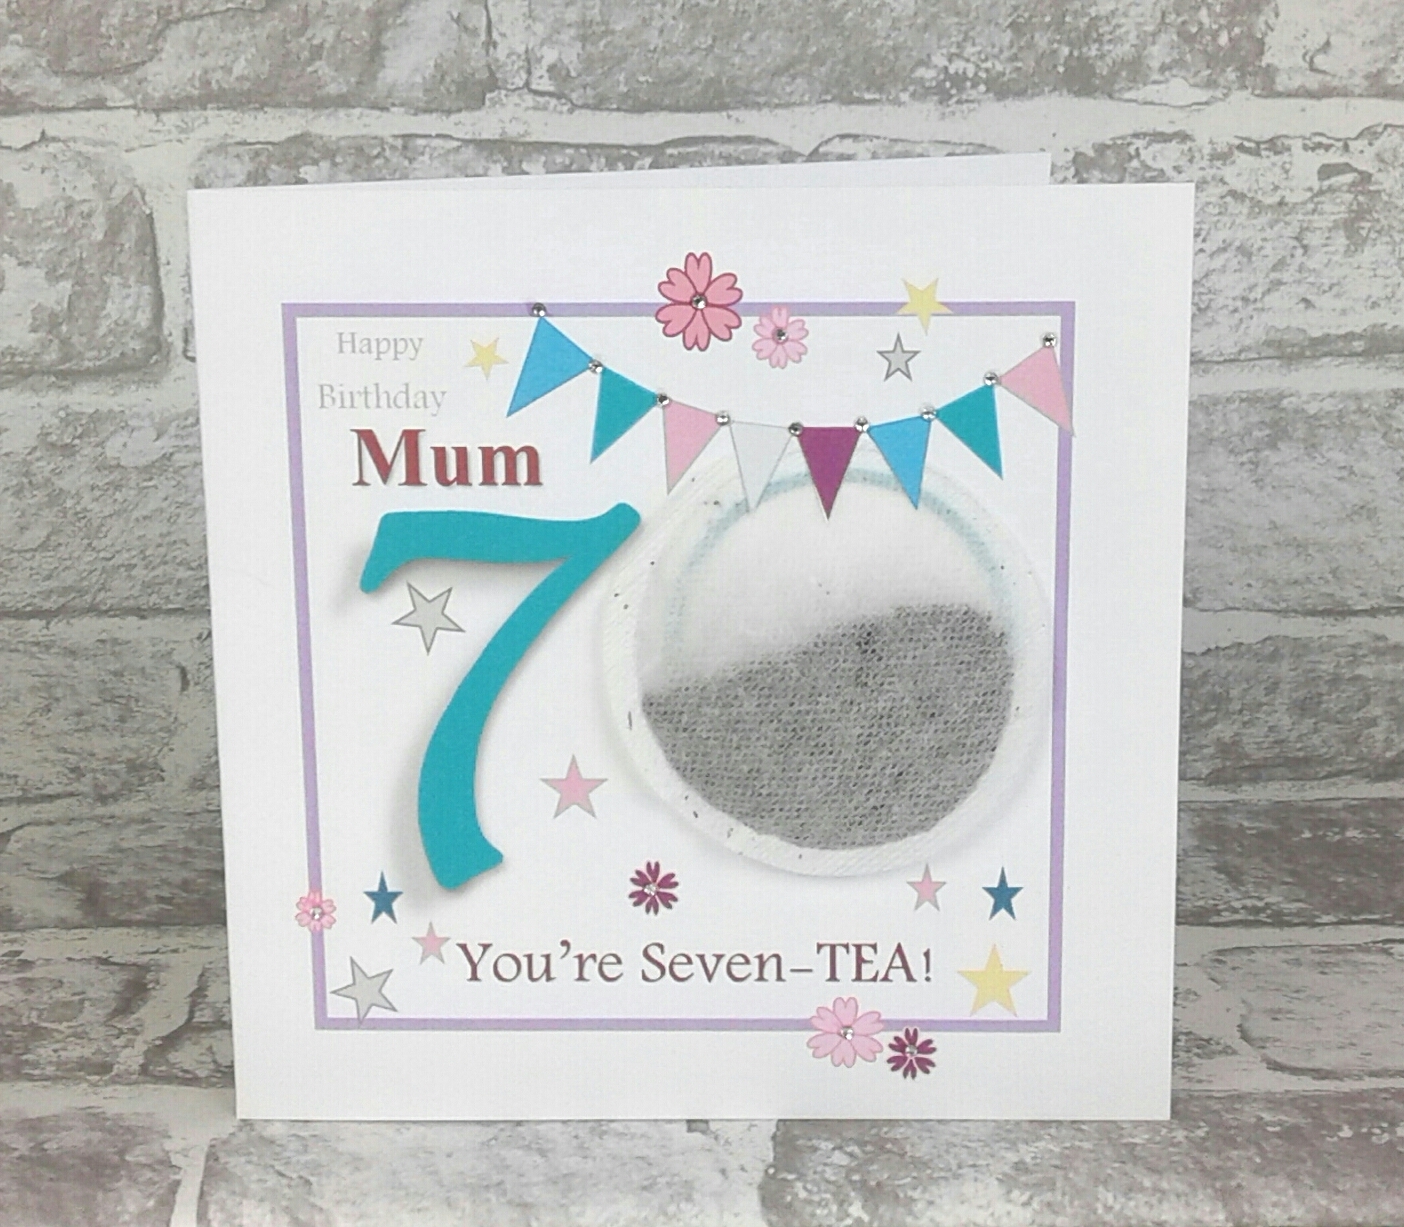 Happy Birthday Mum, Seven-tea